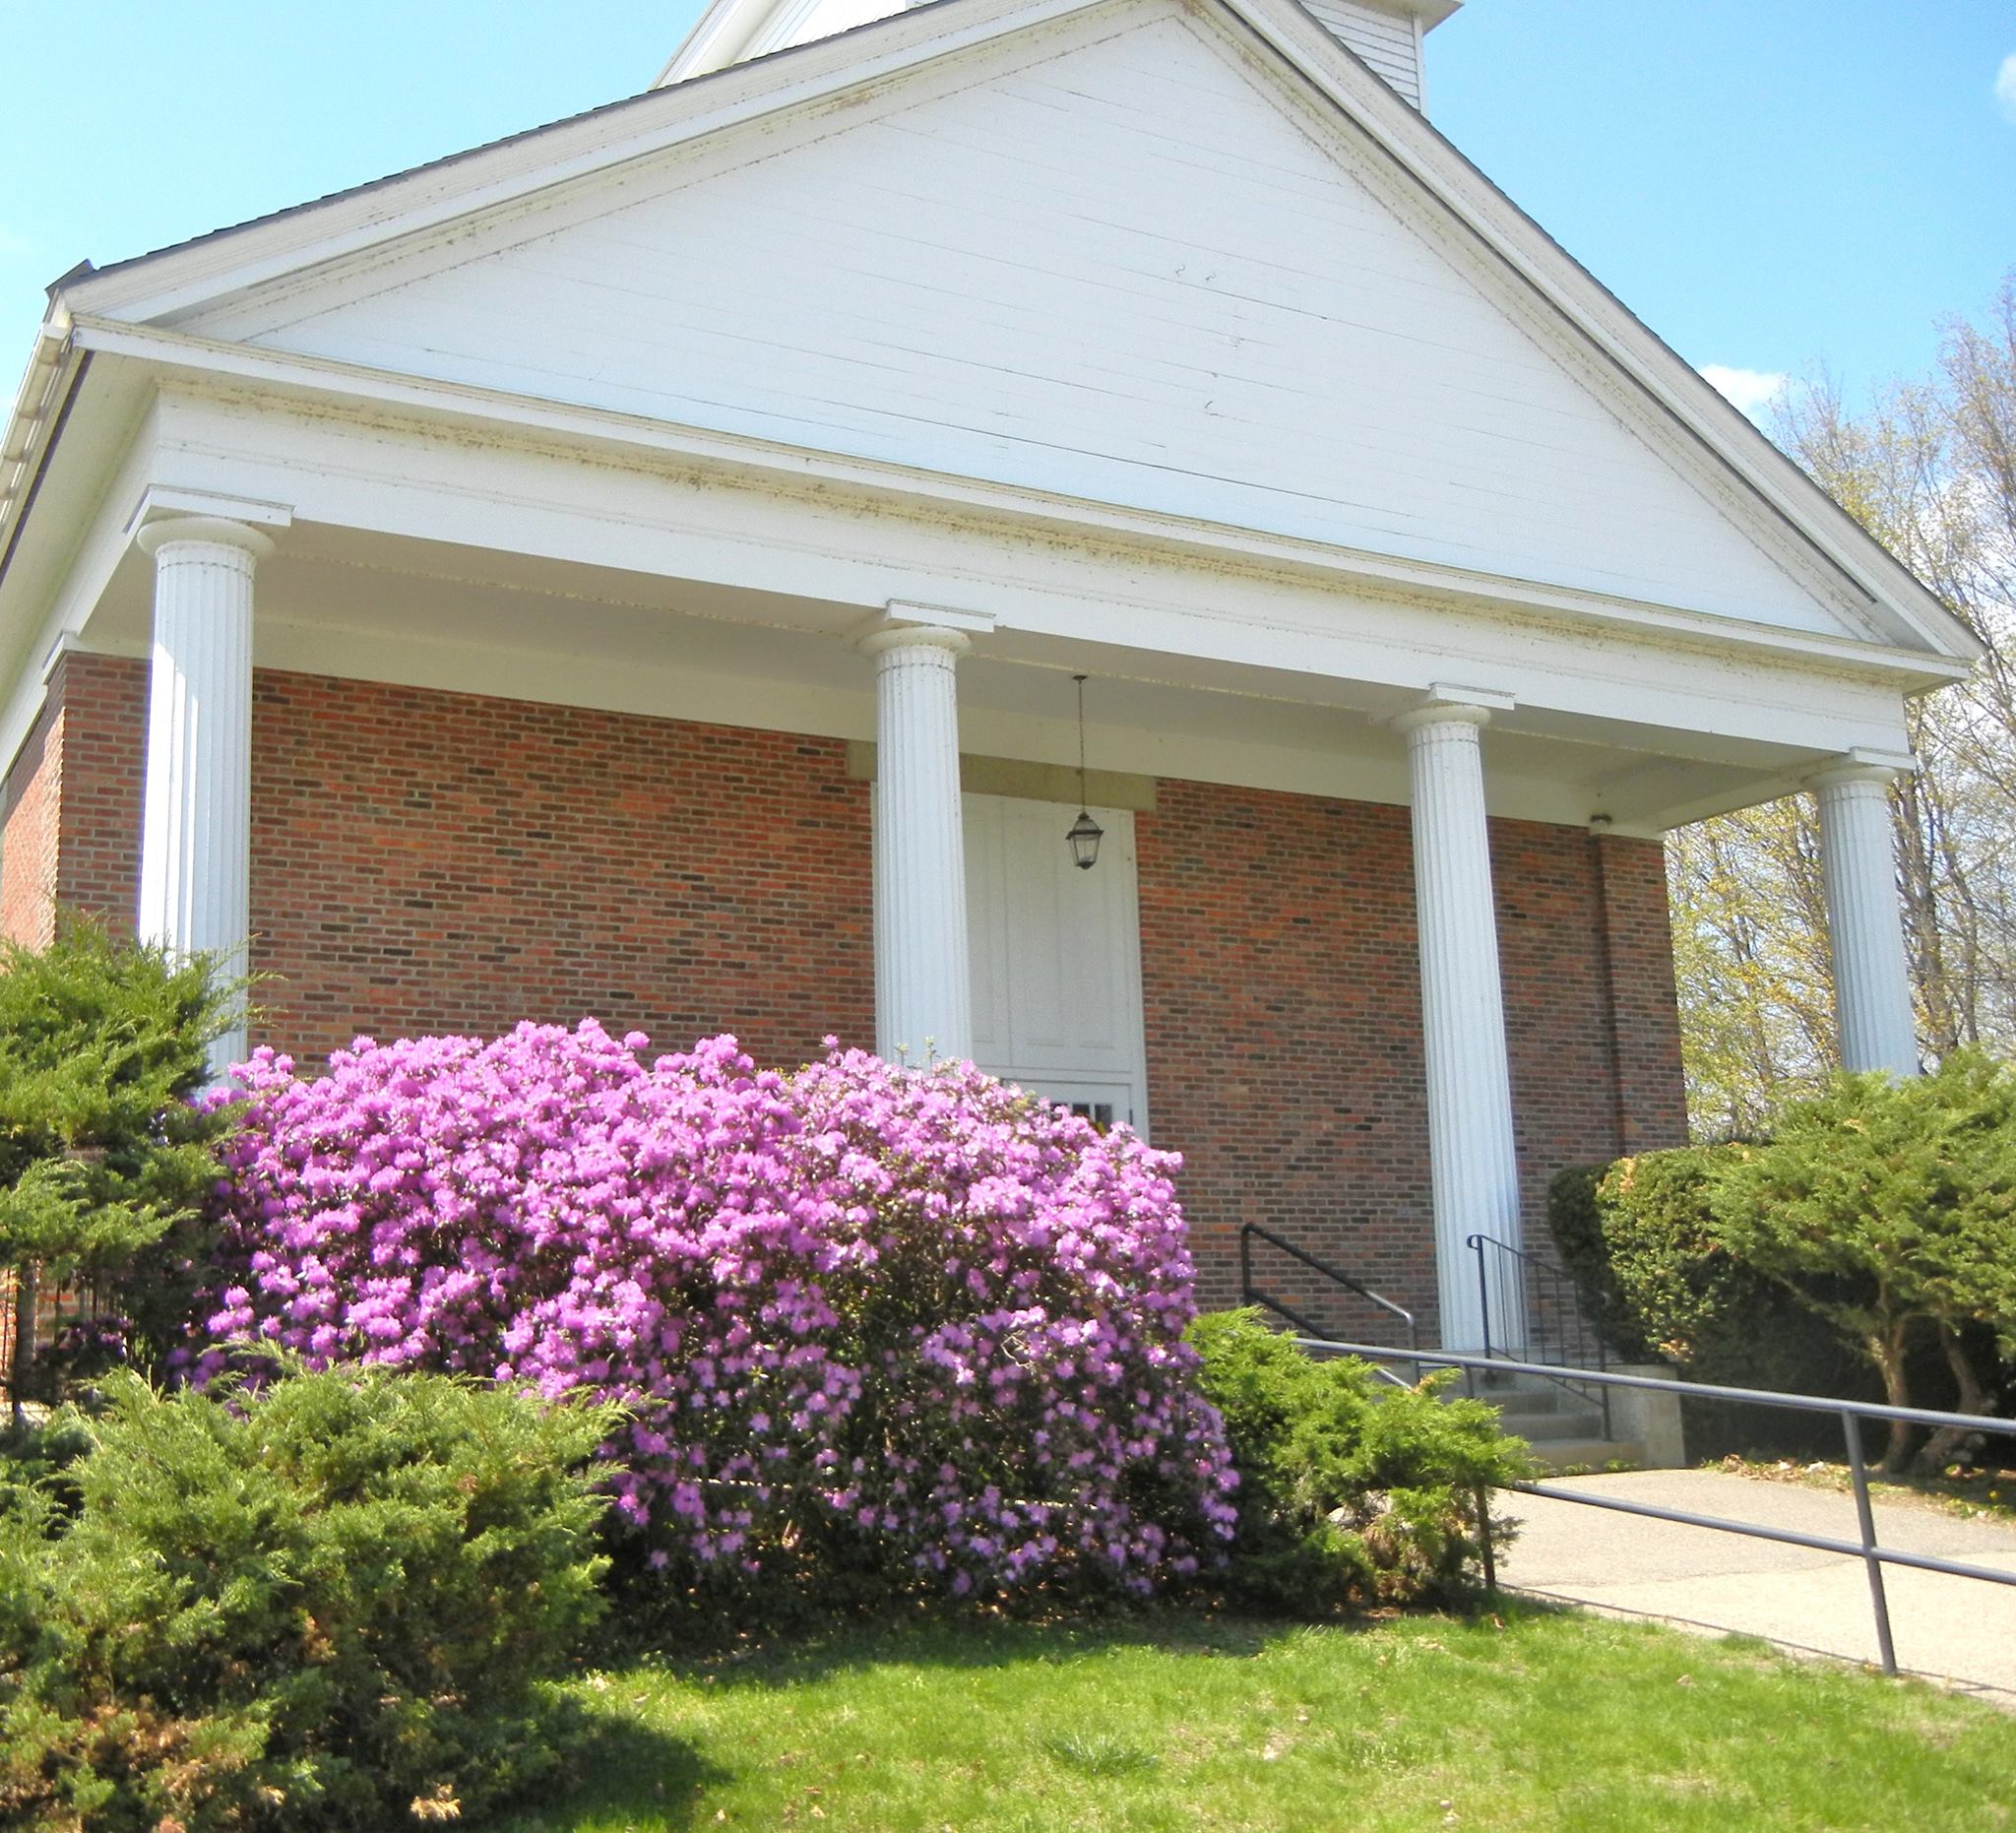 Congregational Church of South Hero